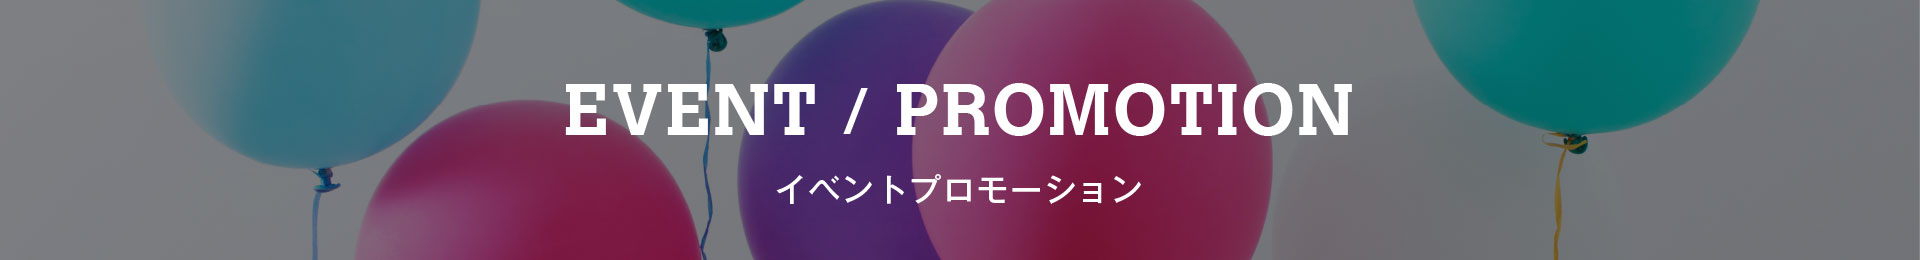 EVENT / PROMOTION  イベントプロモーション